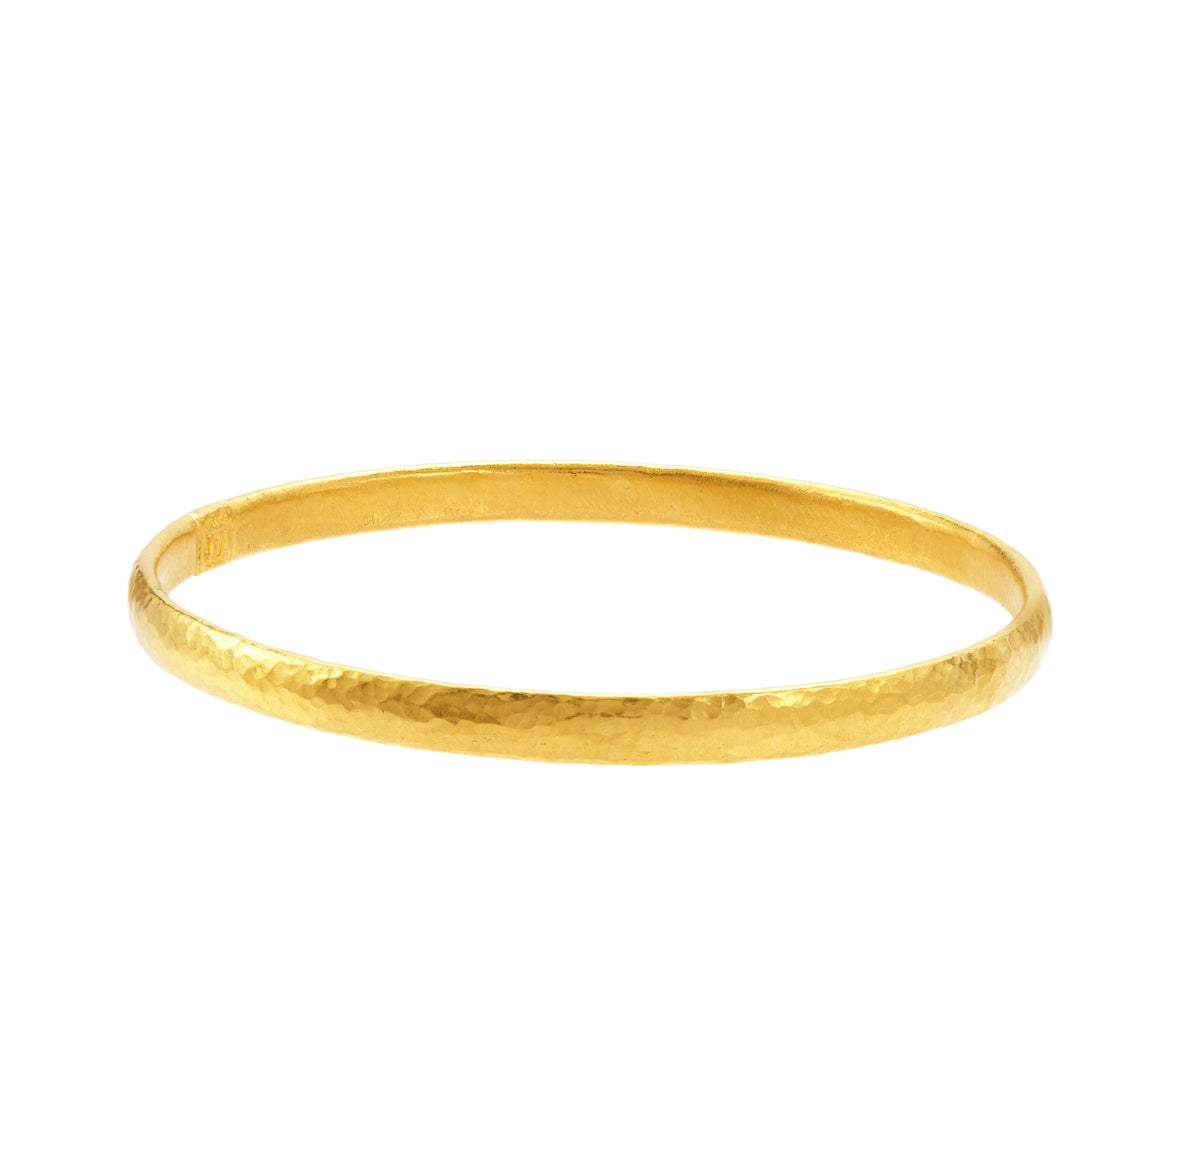 GURHAN, GURHAN Hoopla Gold Plain Bangle Bracelet, 5.5mm Wide, with No Stone